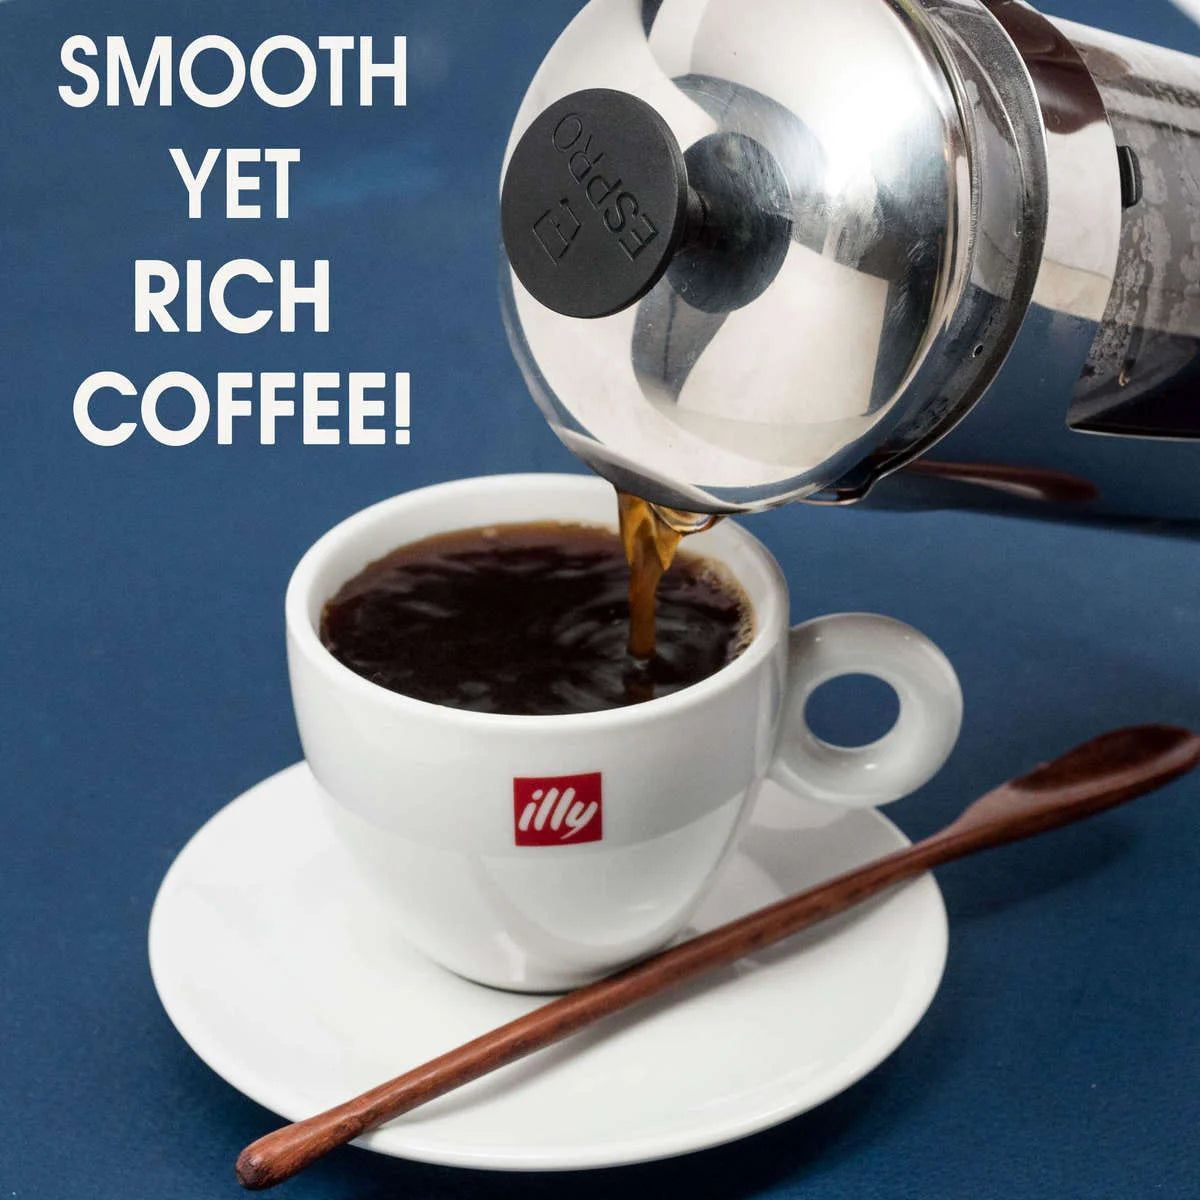 https://cdn.shopify.com/s/files/1/0760/2923/files/w1200_6dd3_Espro-P5-Smooth-yet-rich-coffee.webp?v=1665952229